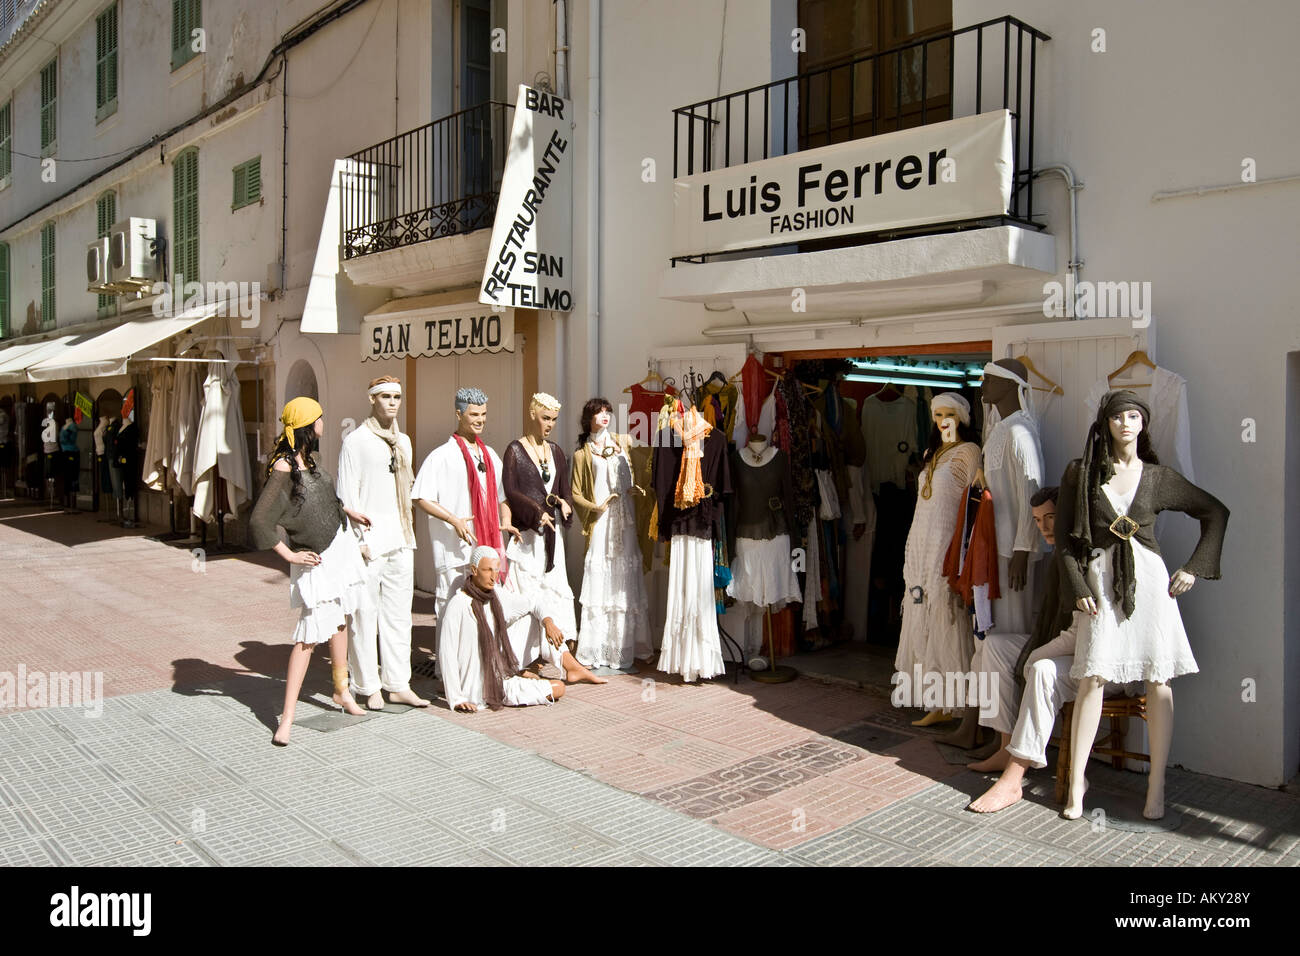 Fashion shop Luis Ferrer, Ibiza, Baleares, Spain Stock Photo